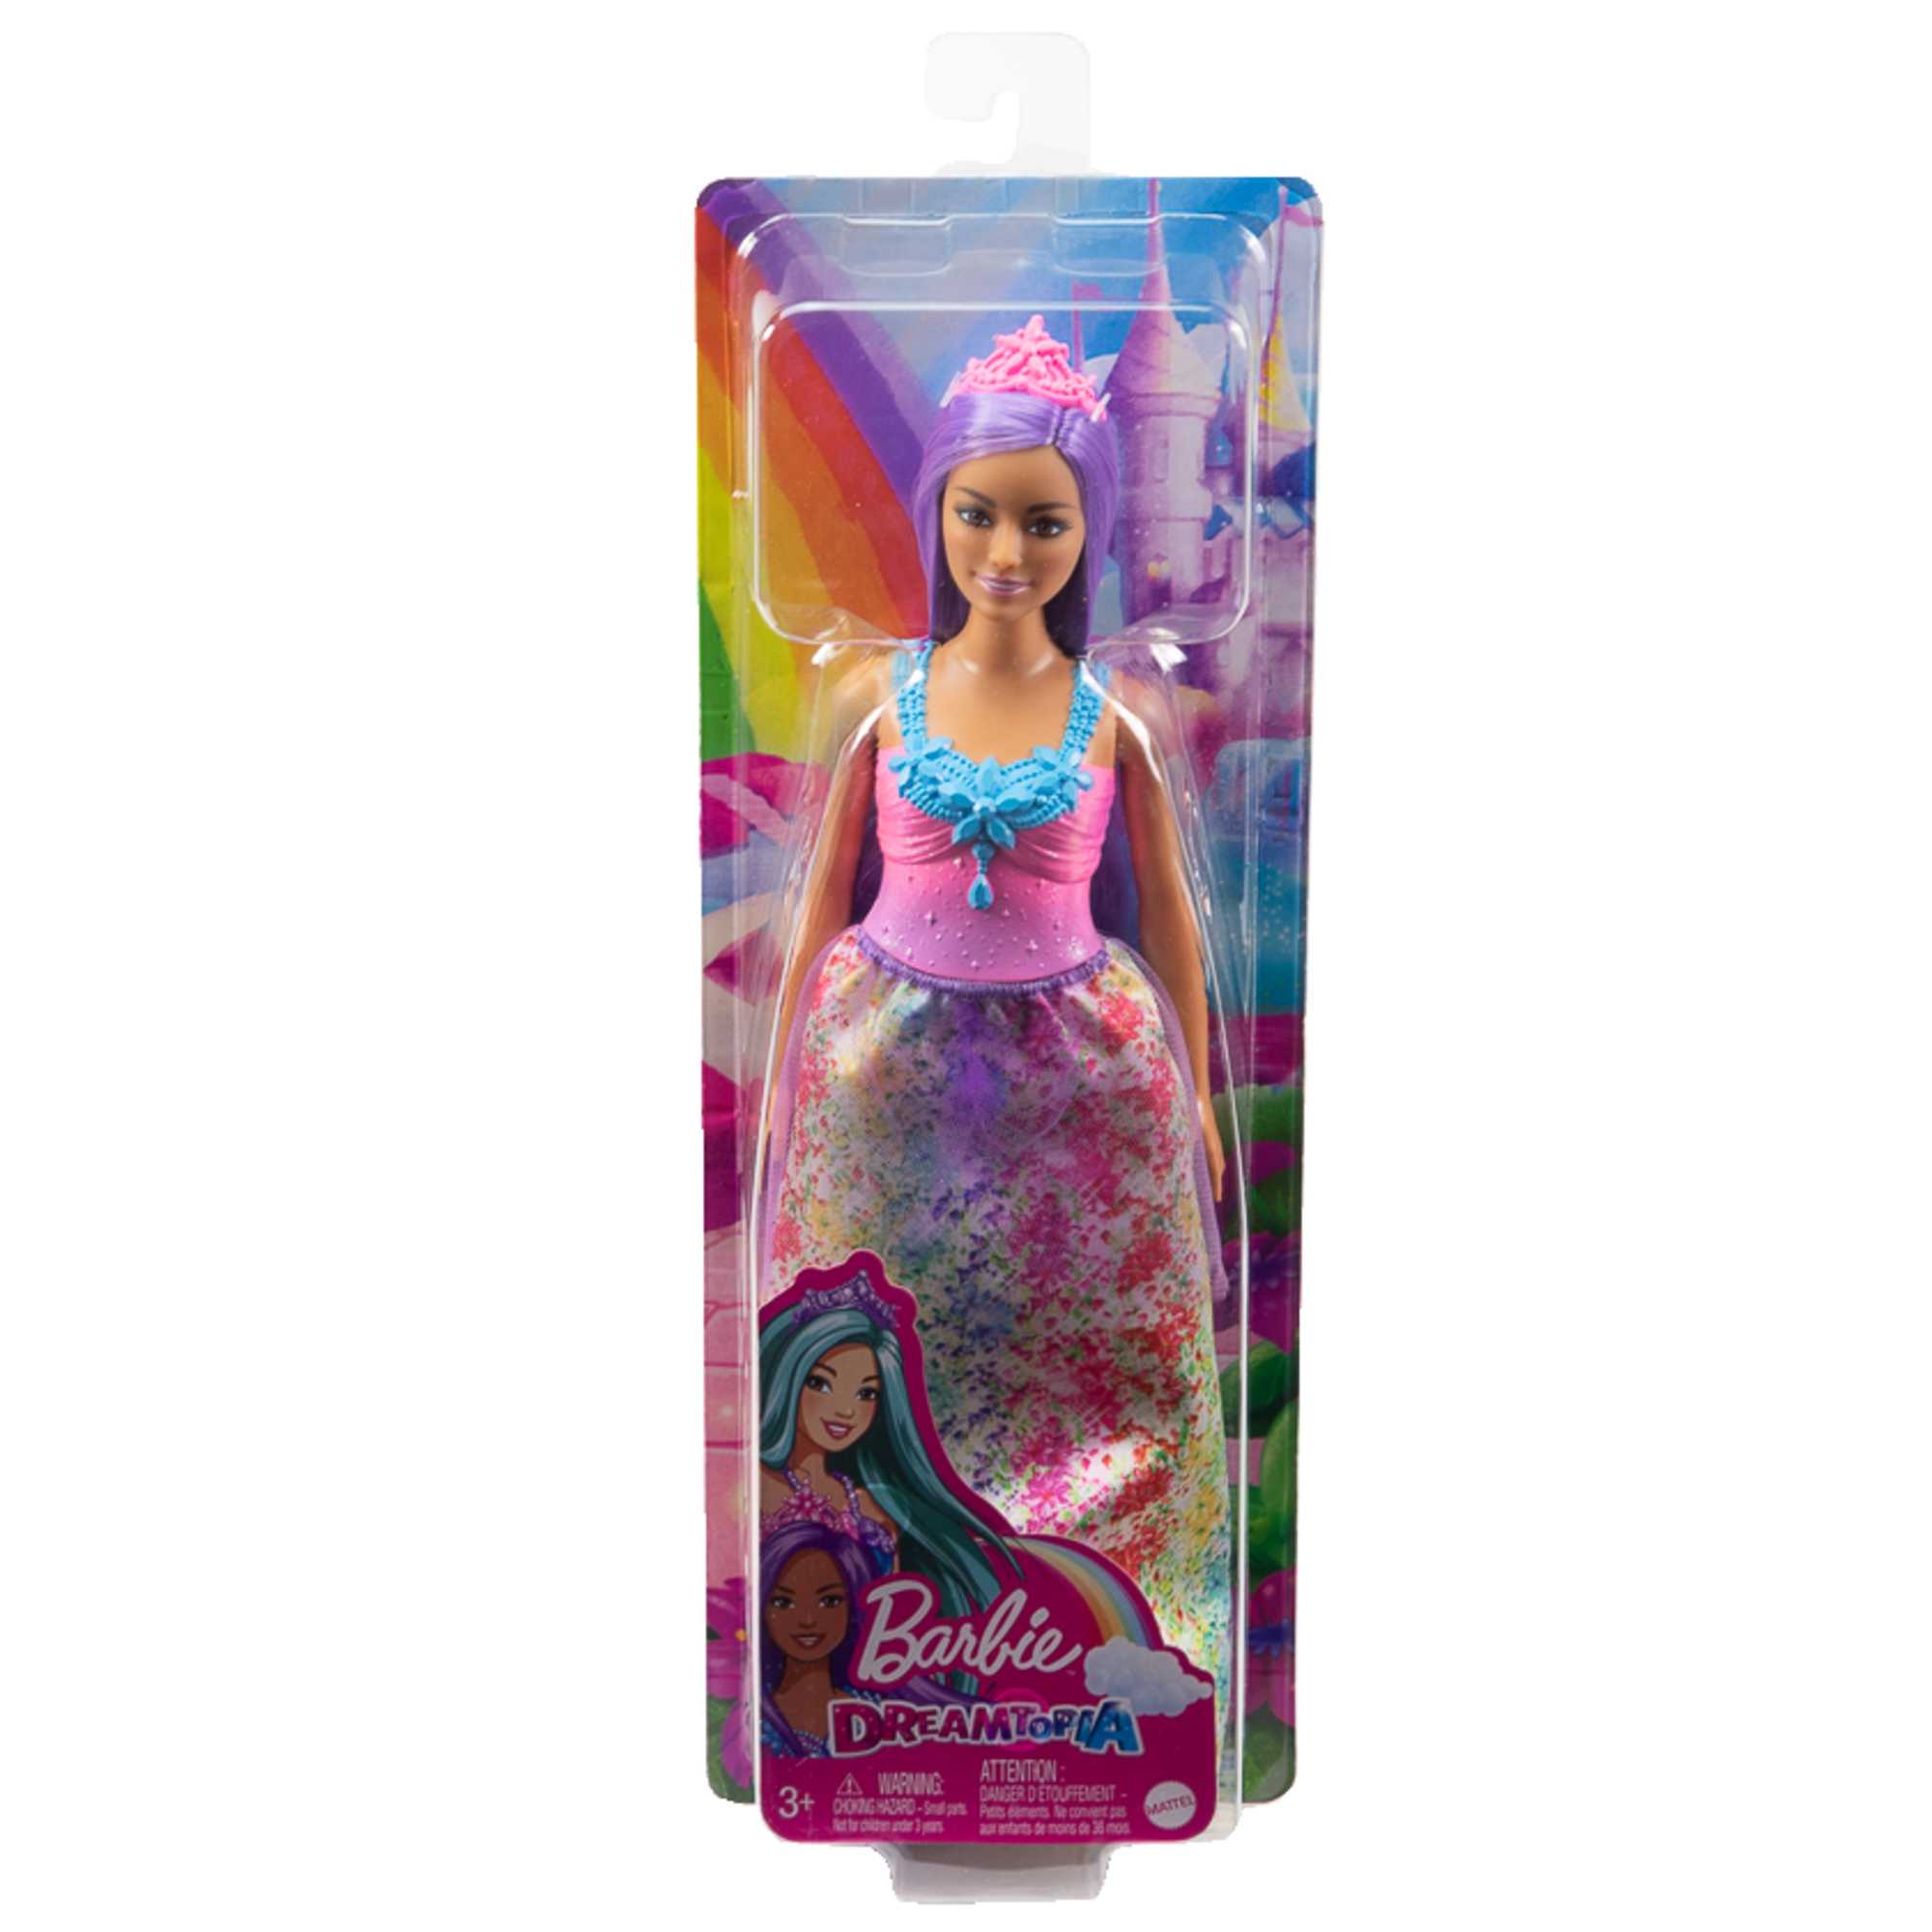 Barbie Dreamtopia Prinzessinnen-Puppe (kurvig, brünettes Haar), ab